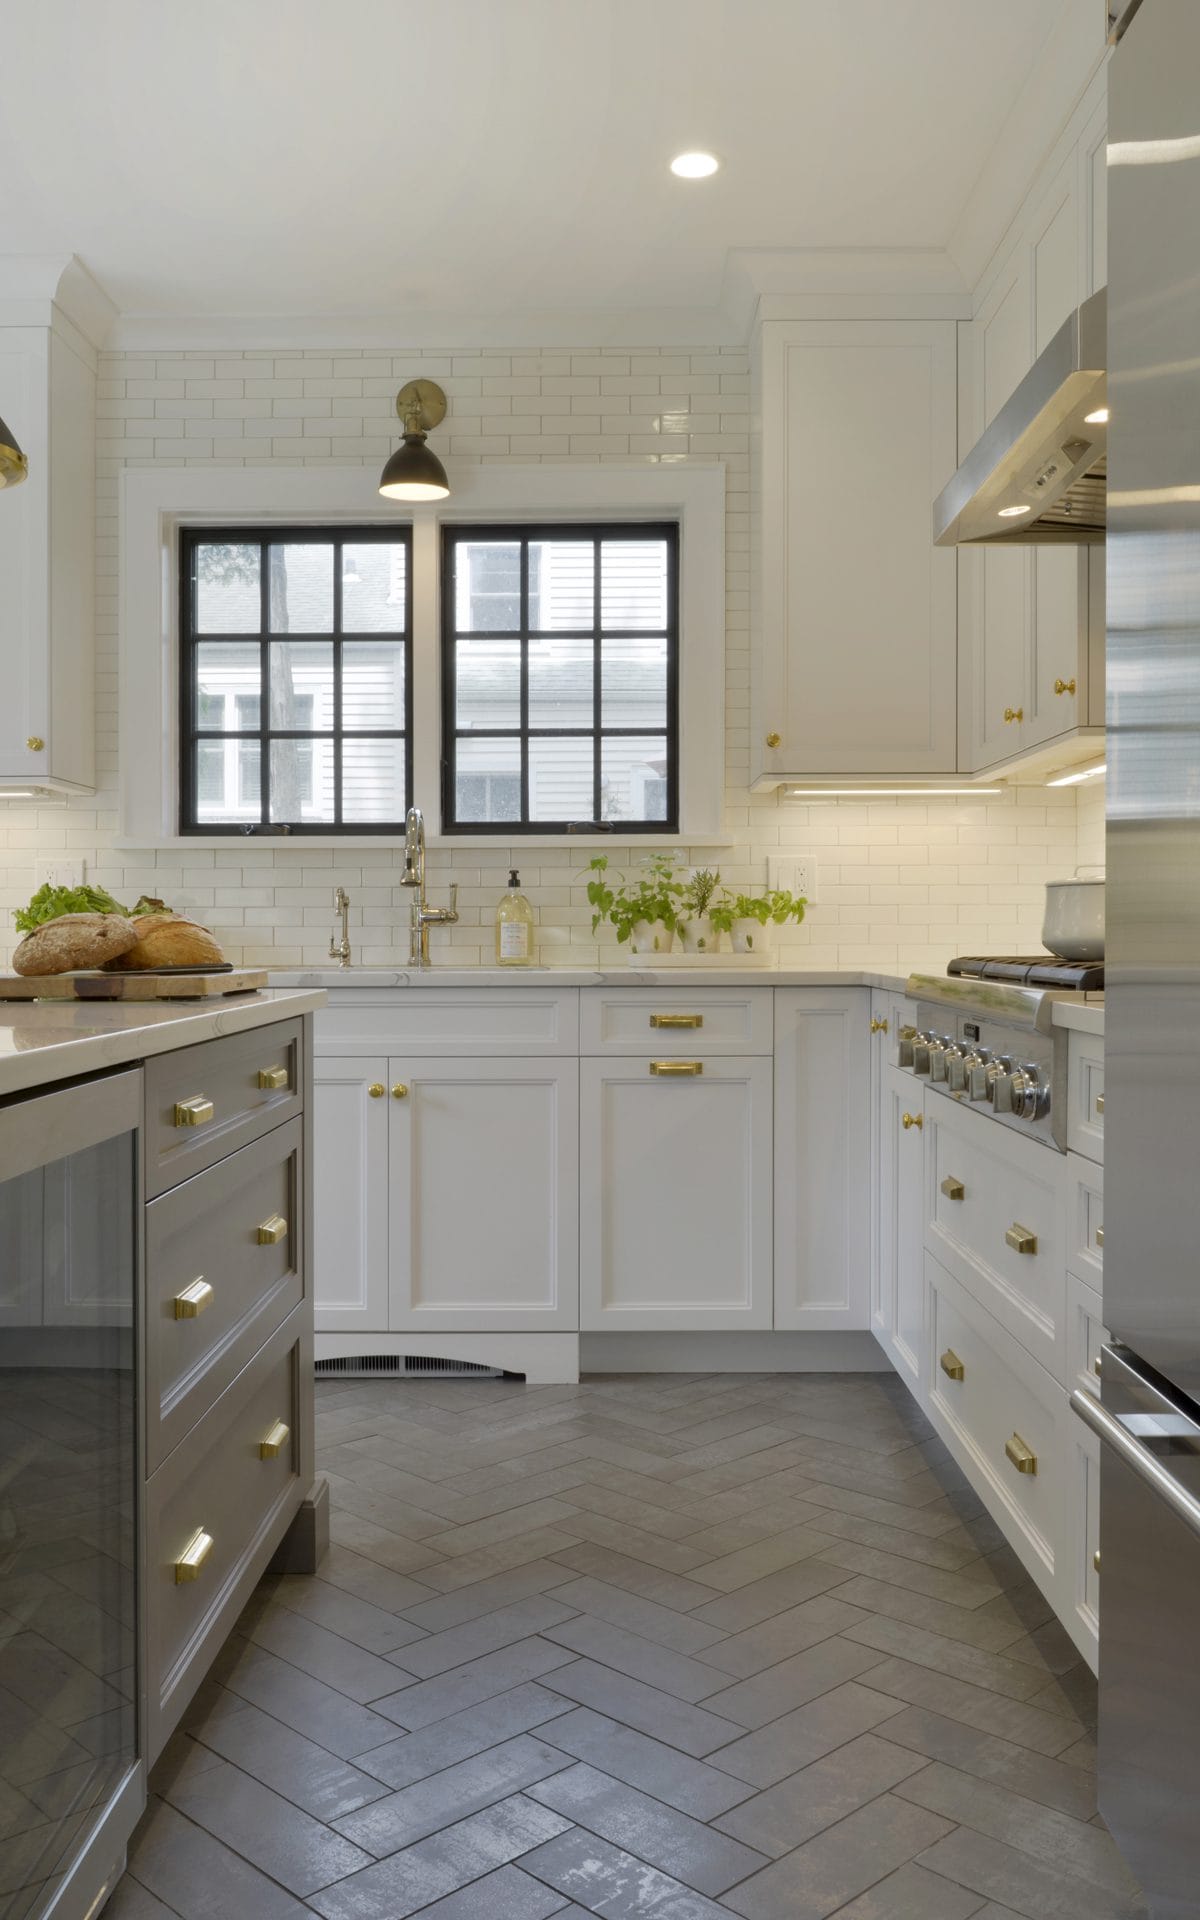 Classic White & Grey Kitchen with Herringbone floor and Black Window Frames.